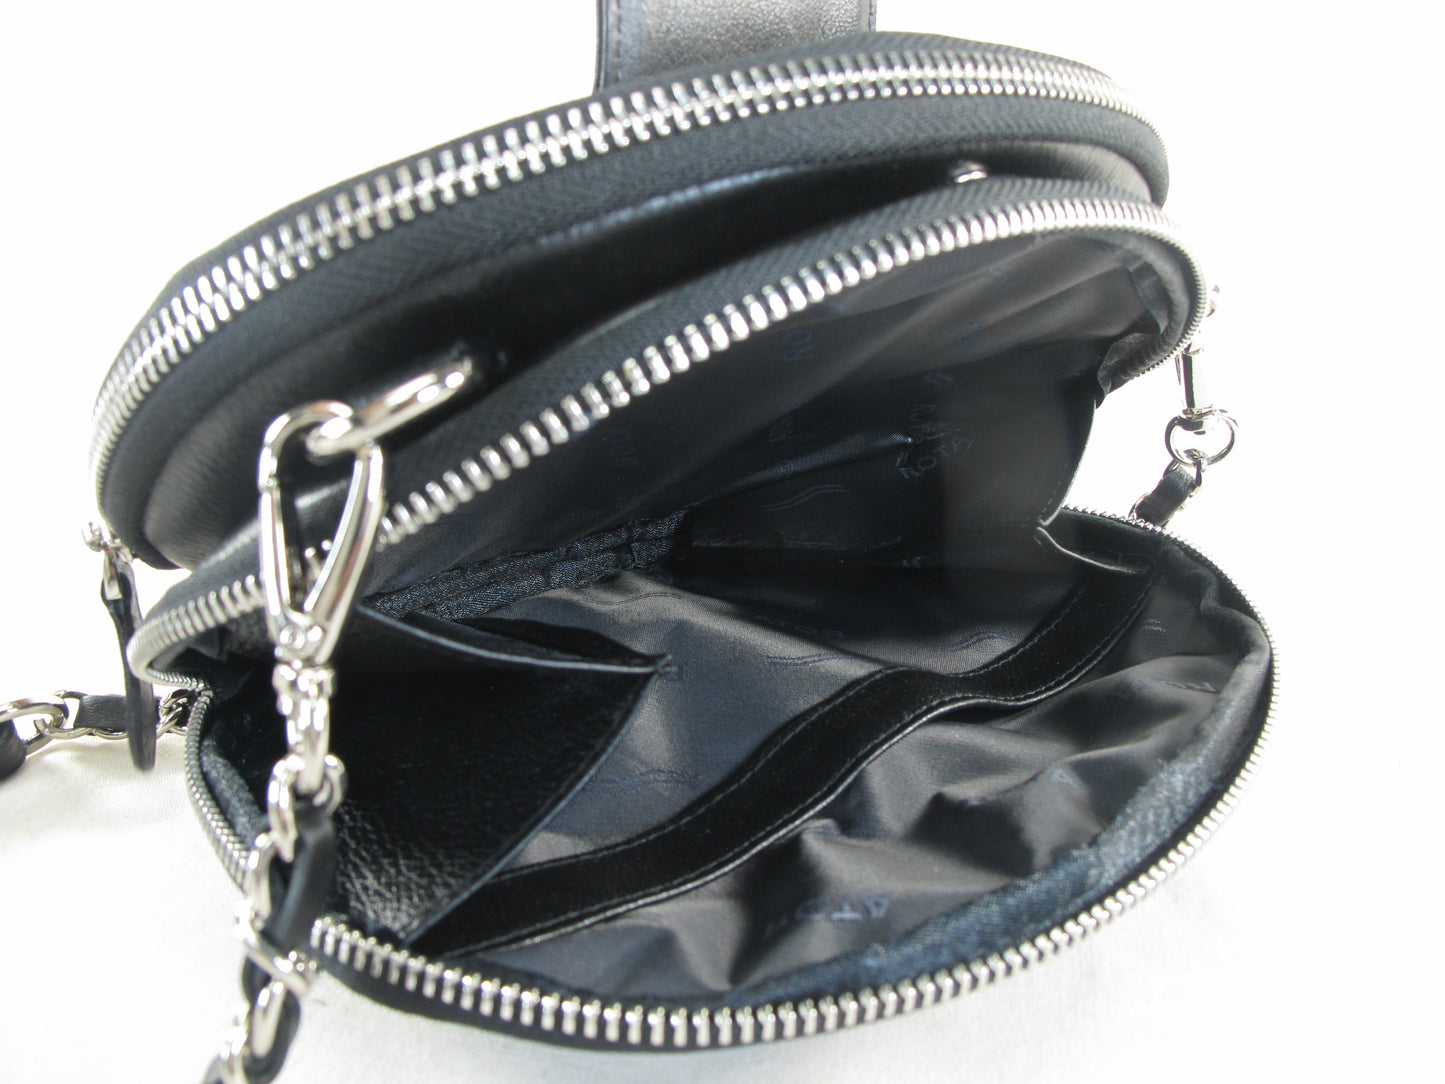 PELGIO Genuine Stingray Skin Leather Women's Double Zip Shoulder Bag Purse